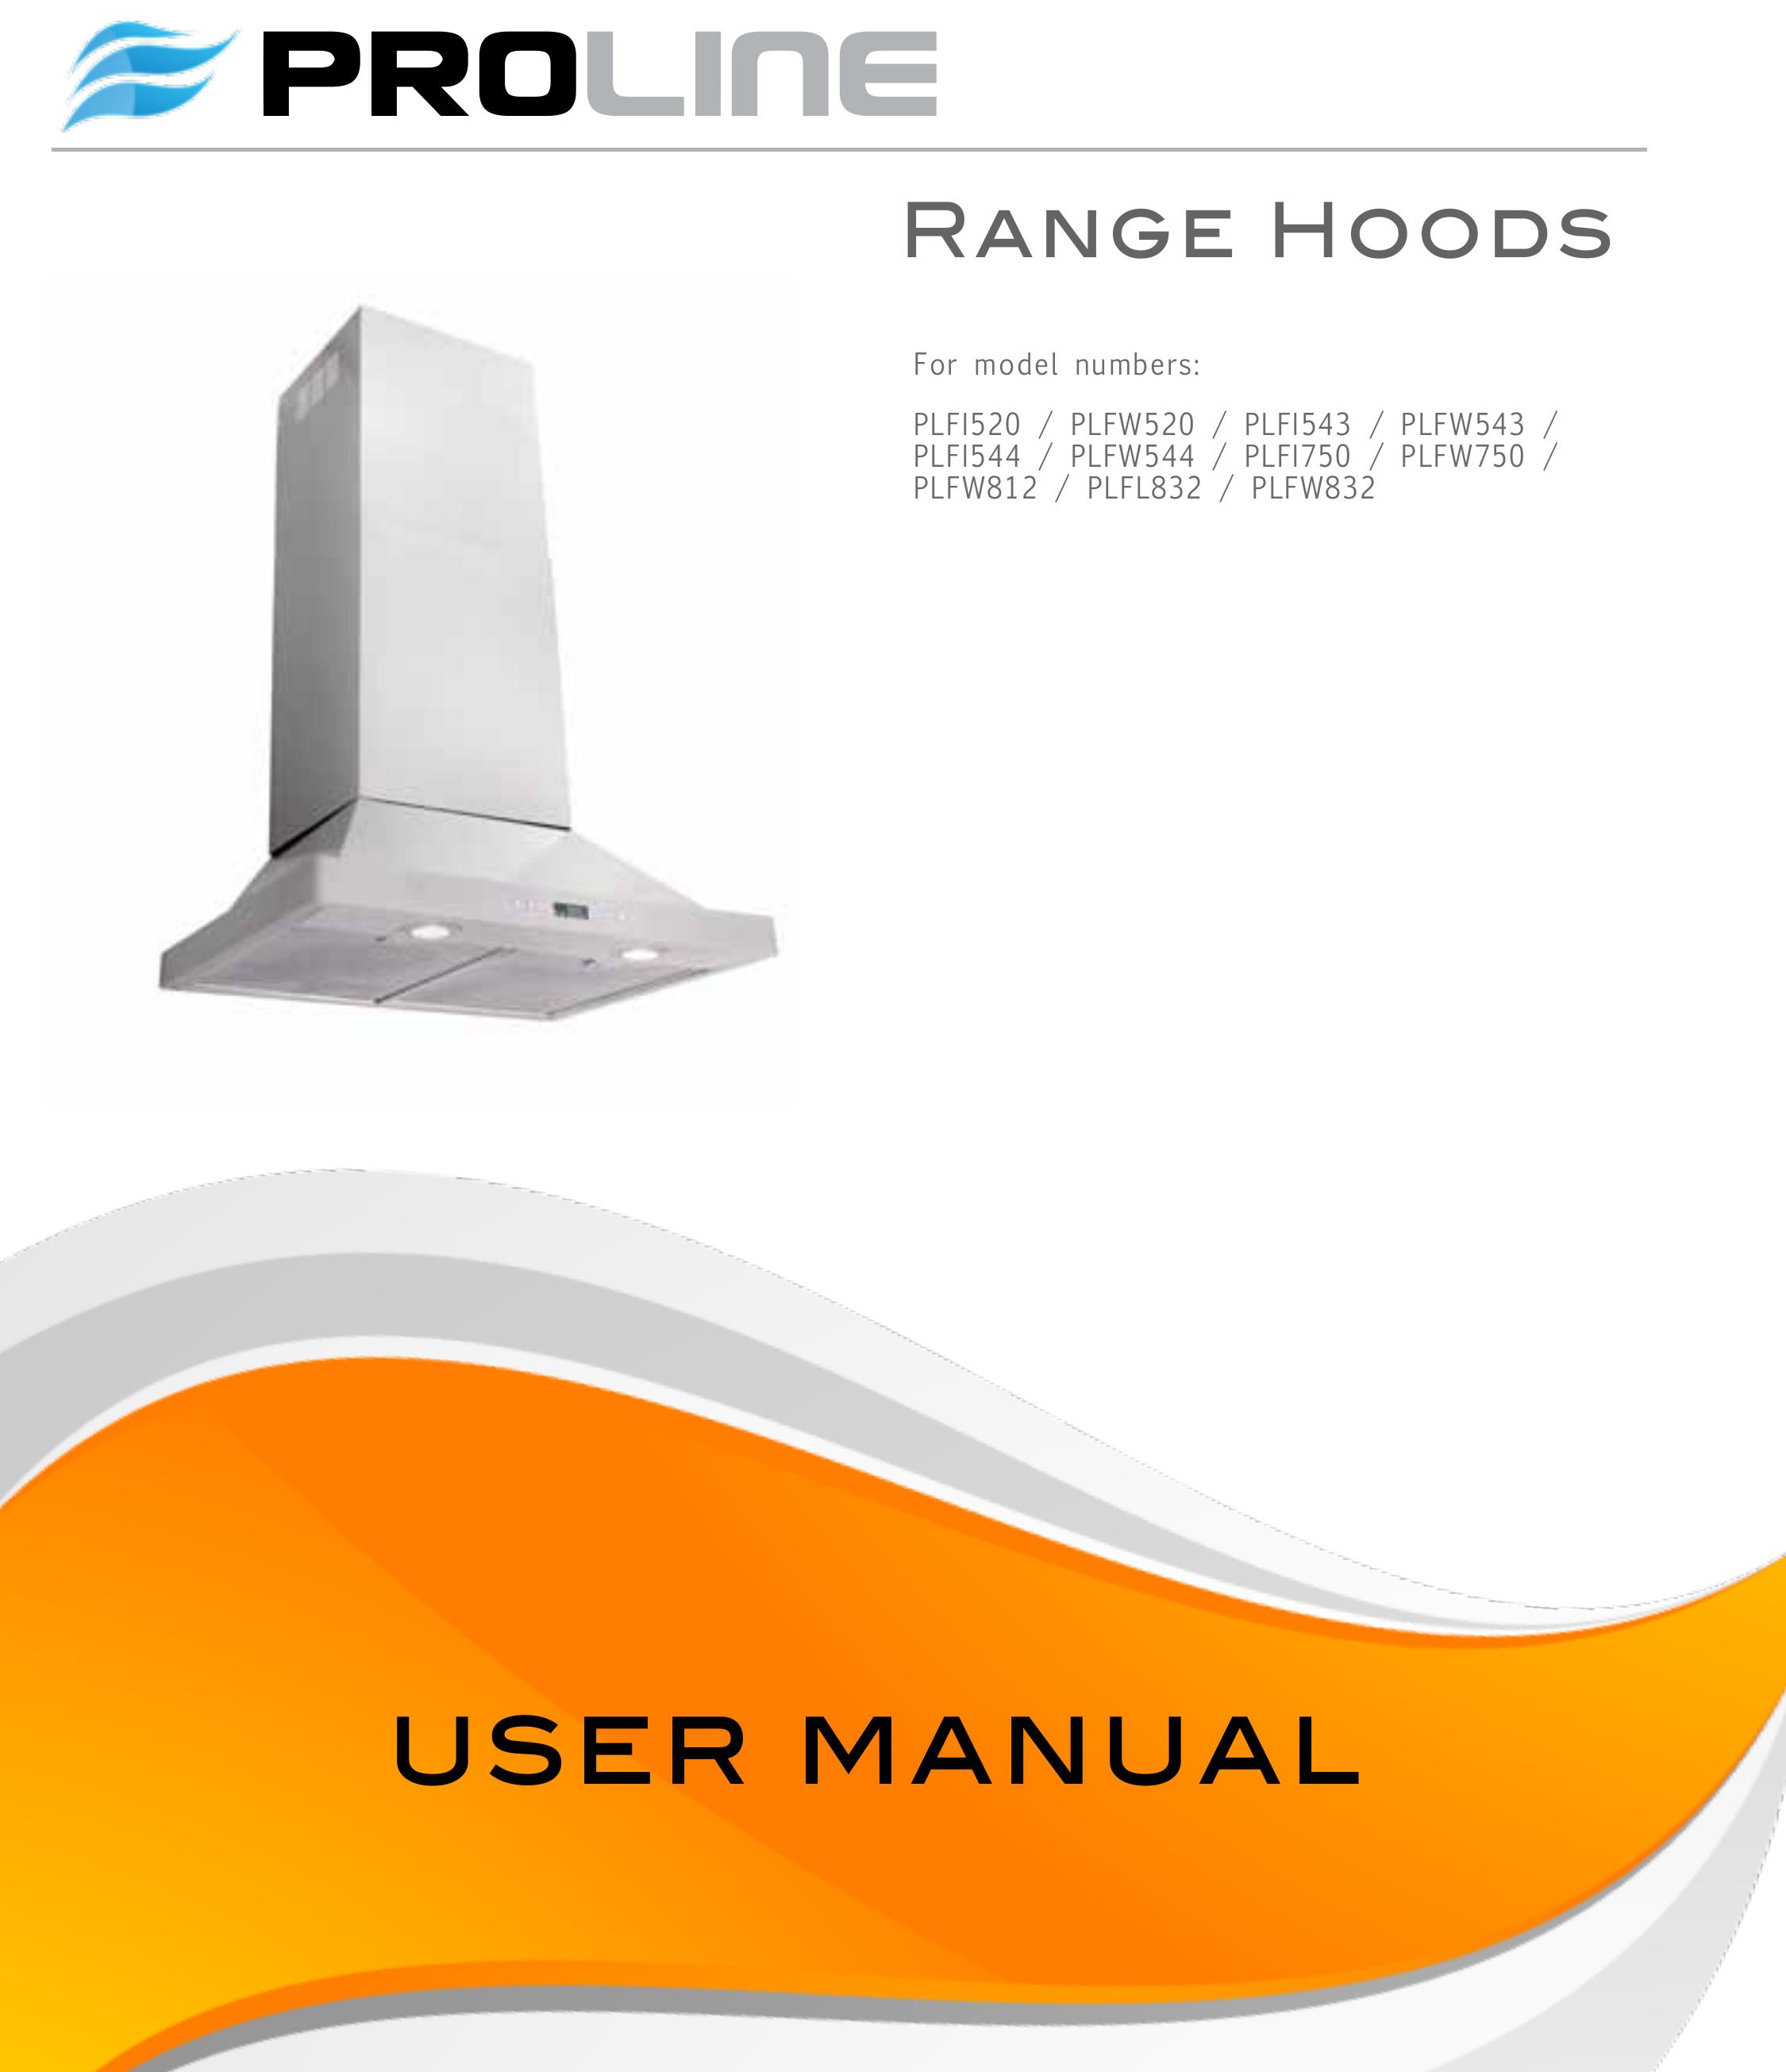 Proline PLFI544 Ventilation Hood User Manual